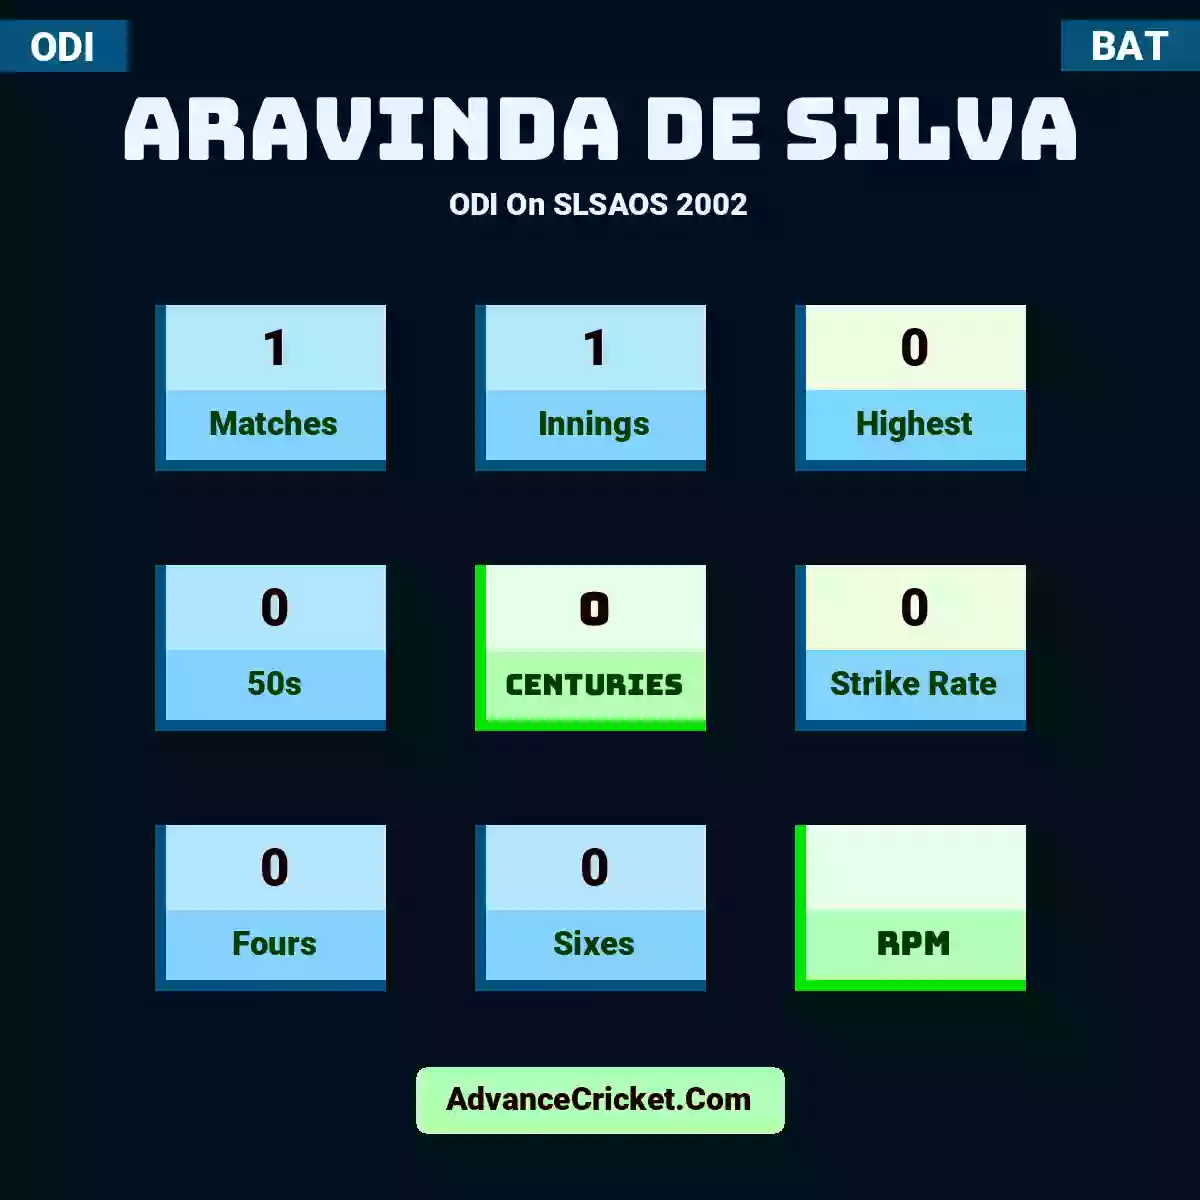 Aravinda de Silva ODI  On SLSAOS 2002, Aravinda de Silva played 1 matches, scored 0 runs as highest, 0 half-centuries, and 0 centuries, with a strike rate of 0. A.Silva hit 0 fours and 0 sixes.